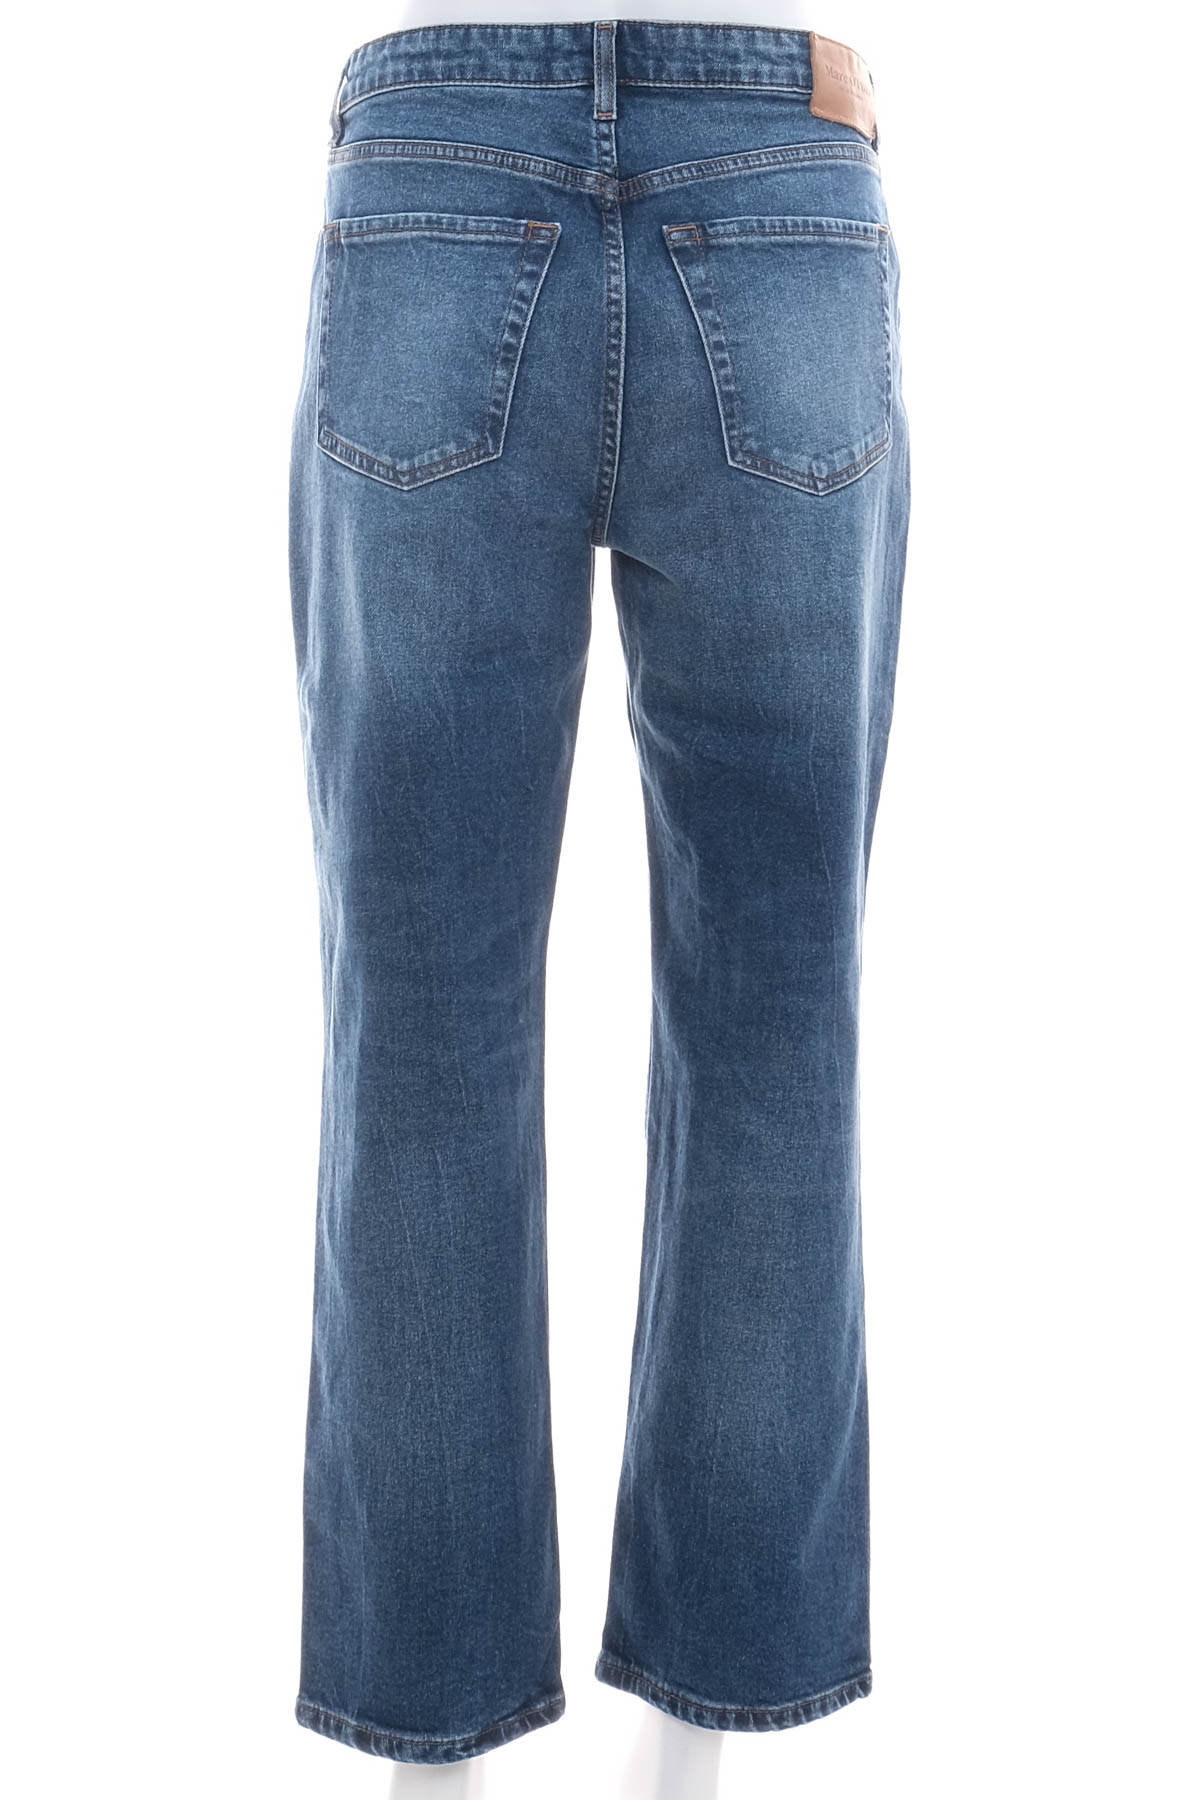 Women's jeans - Marc O' Polo - 1